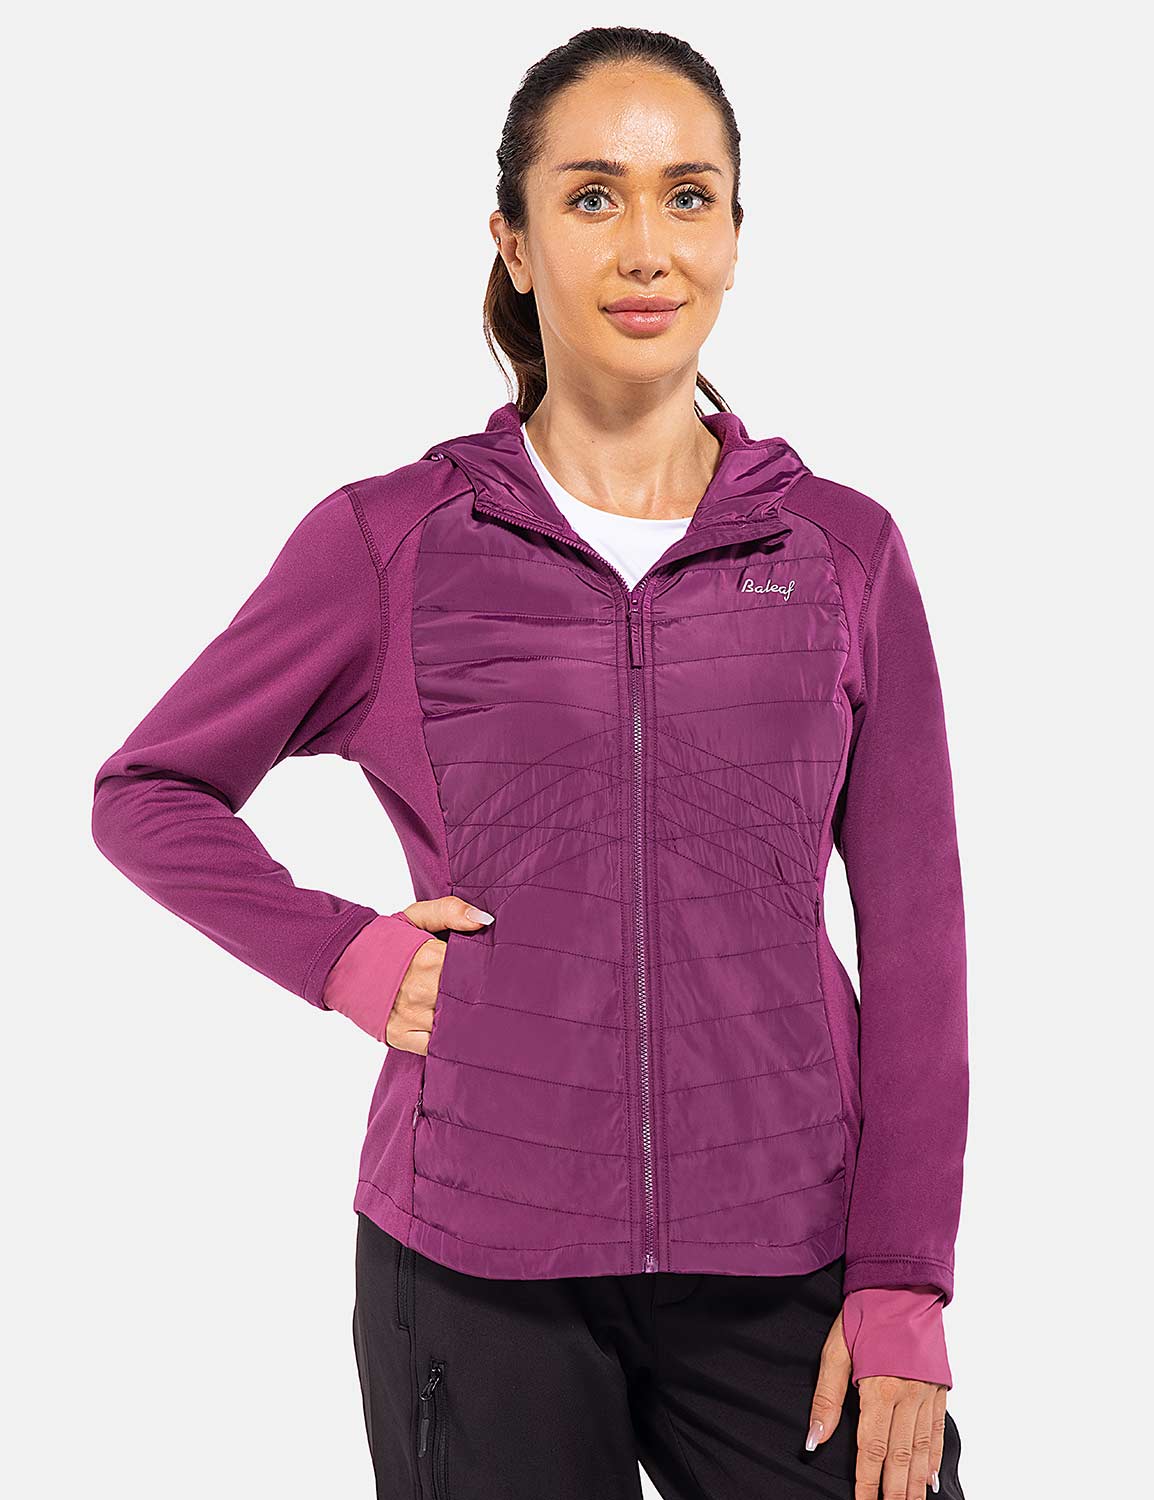 Baleaf Women's Triumph Thermal Water-Resistant Hooded Jacket cga030 Dark Purple Front